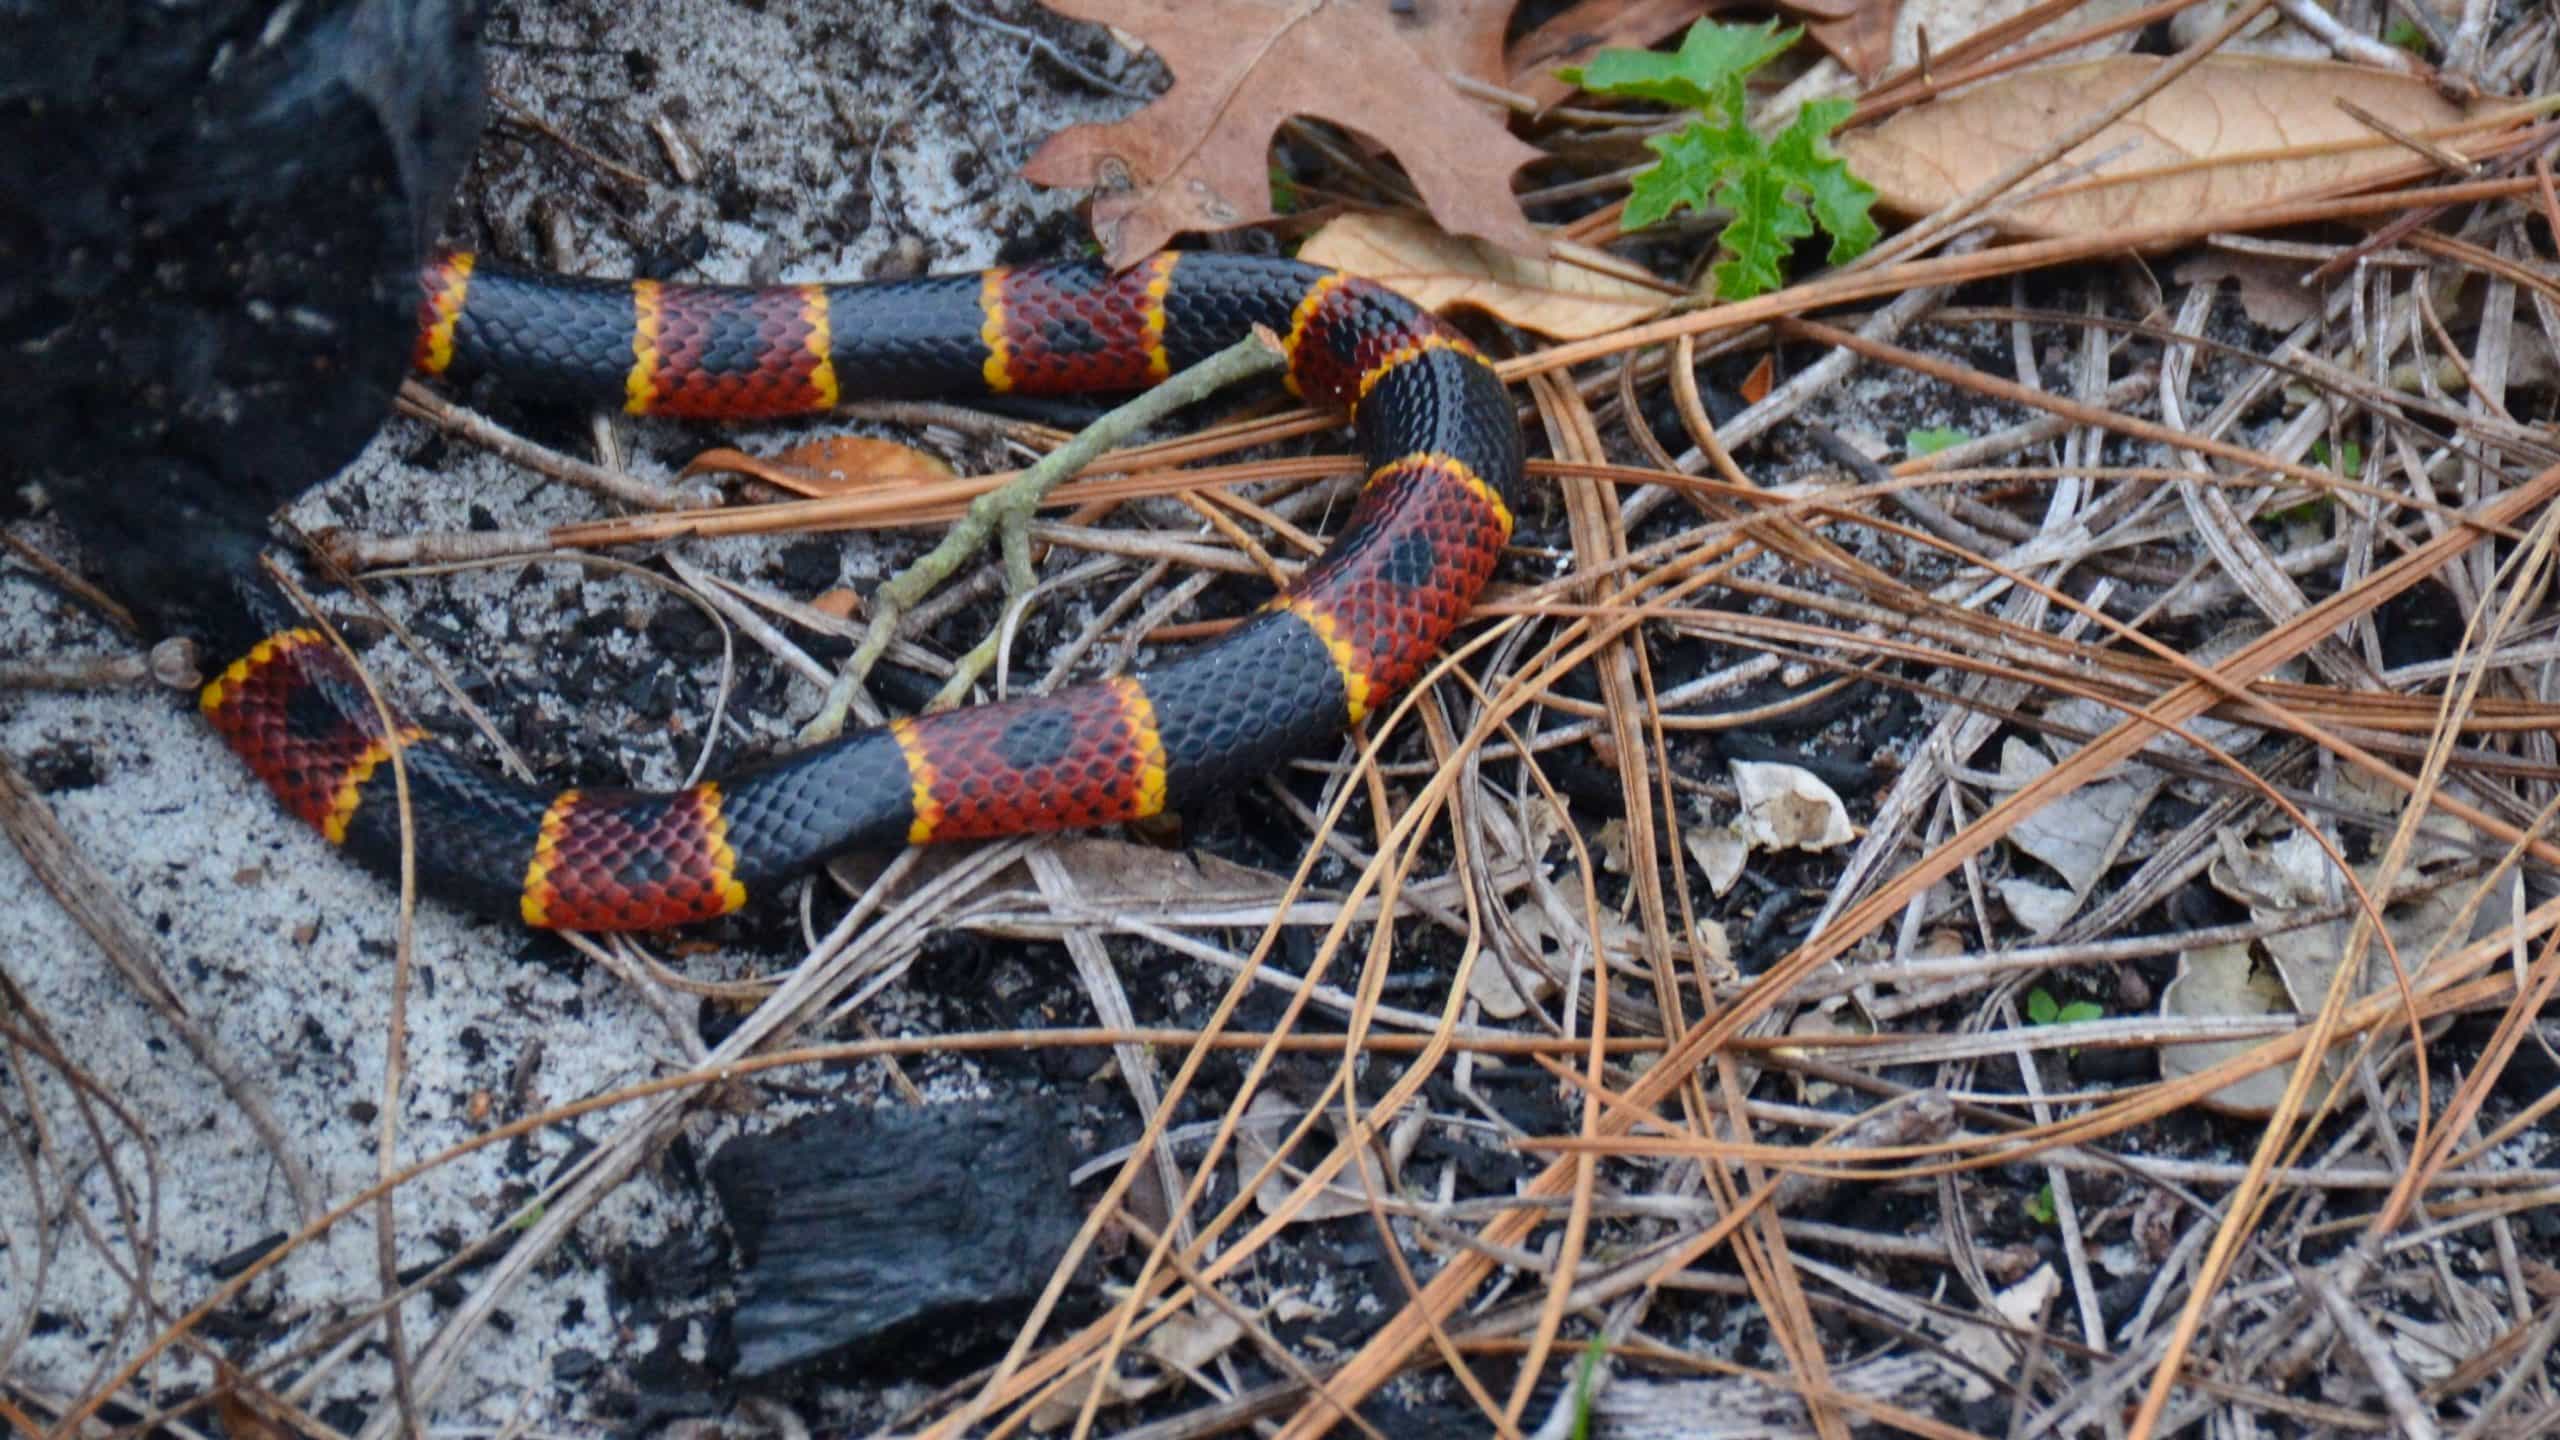 How to identify venomous snakes in Florida. Florida Hikes!